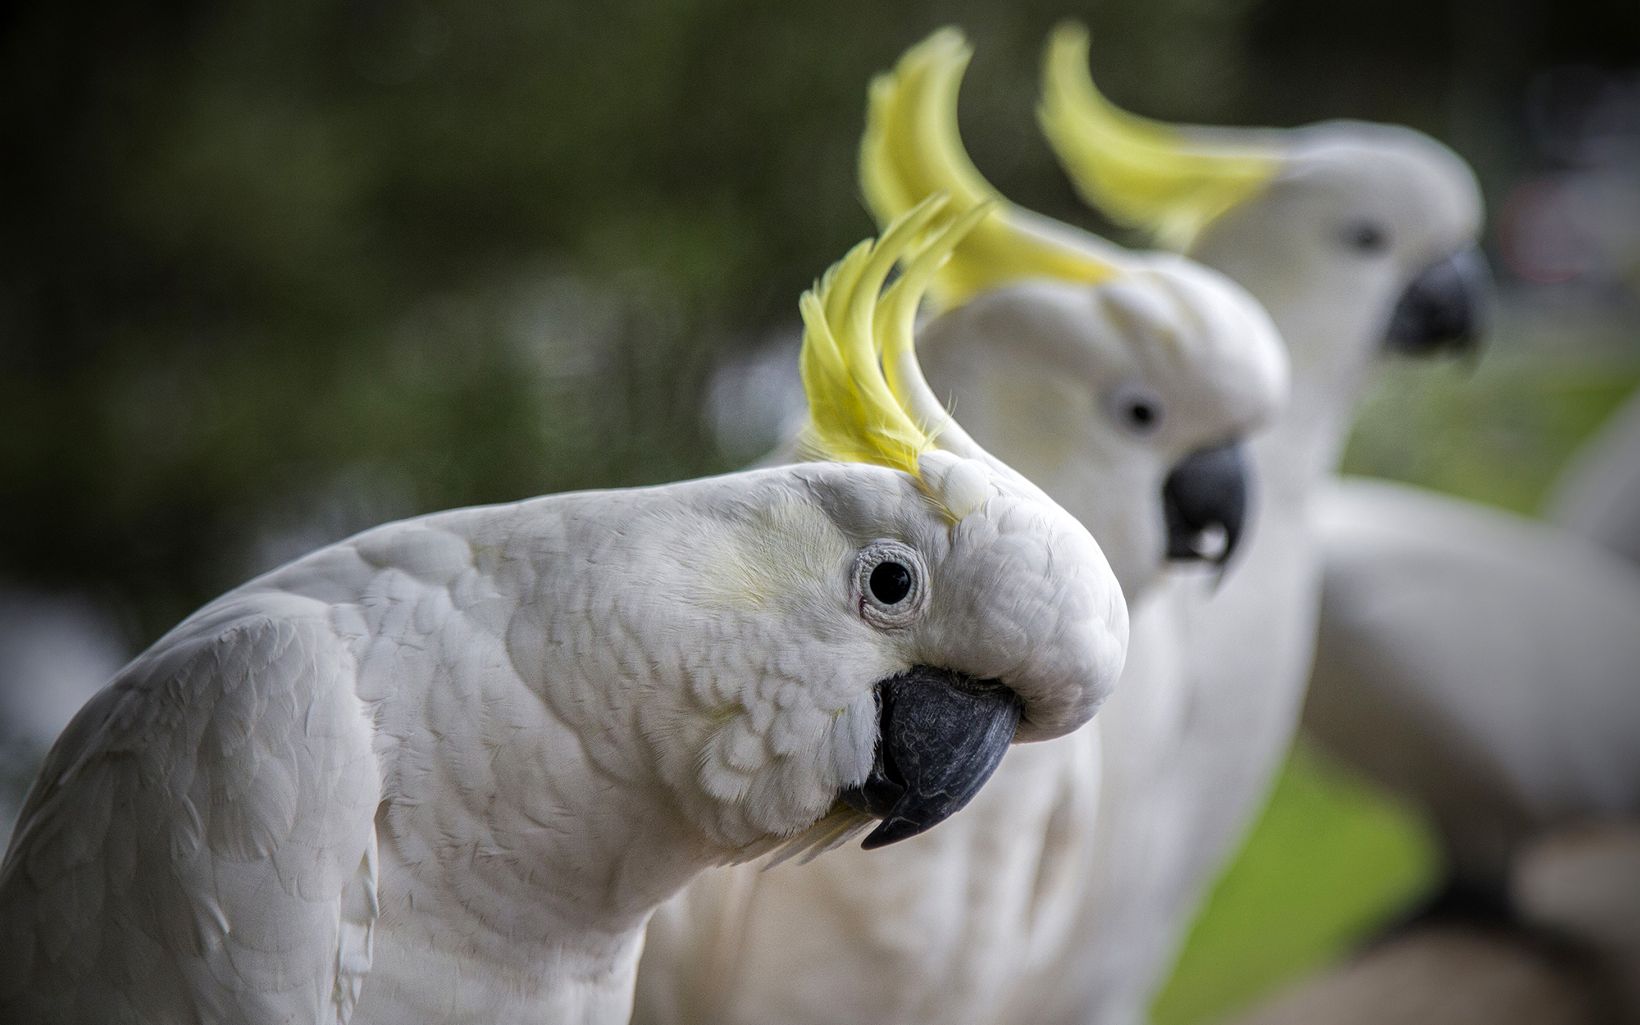 types of australian parrots